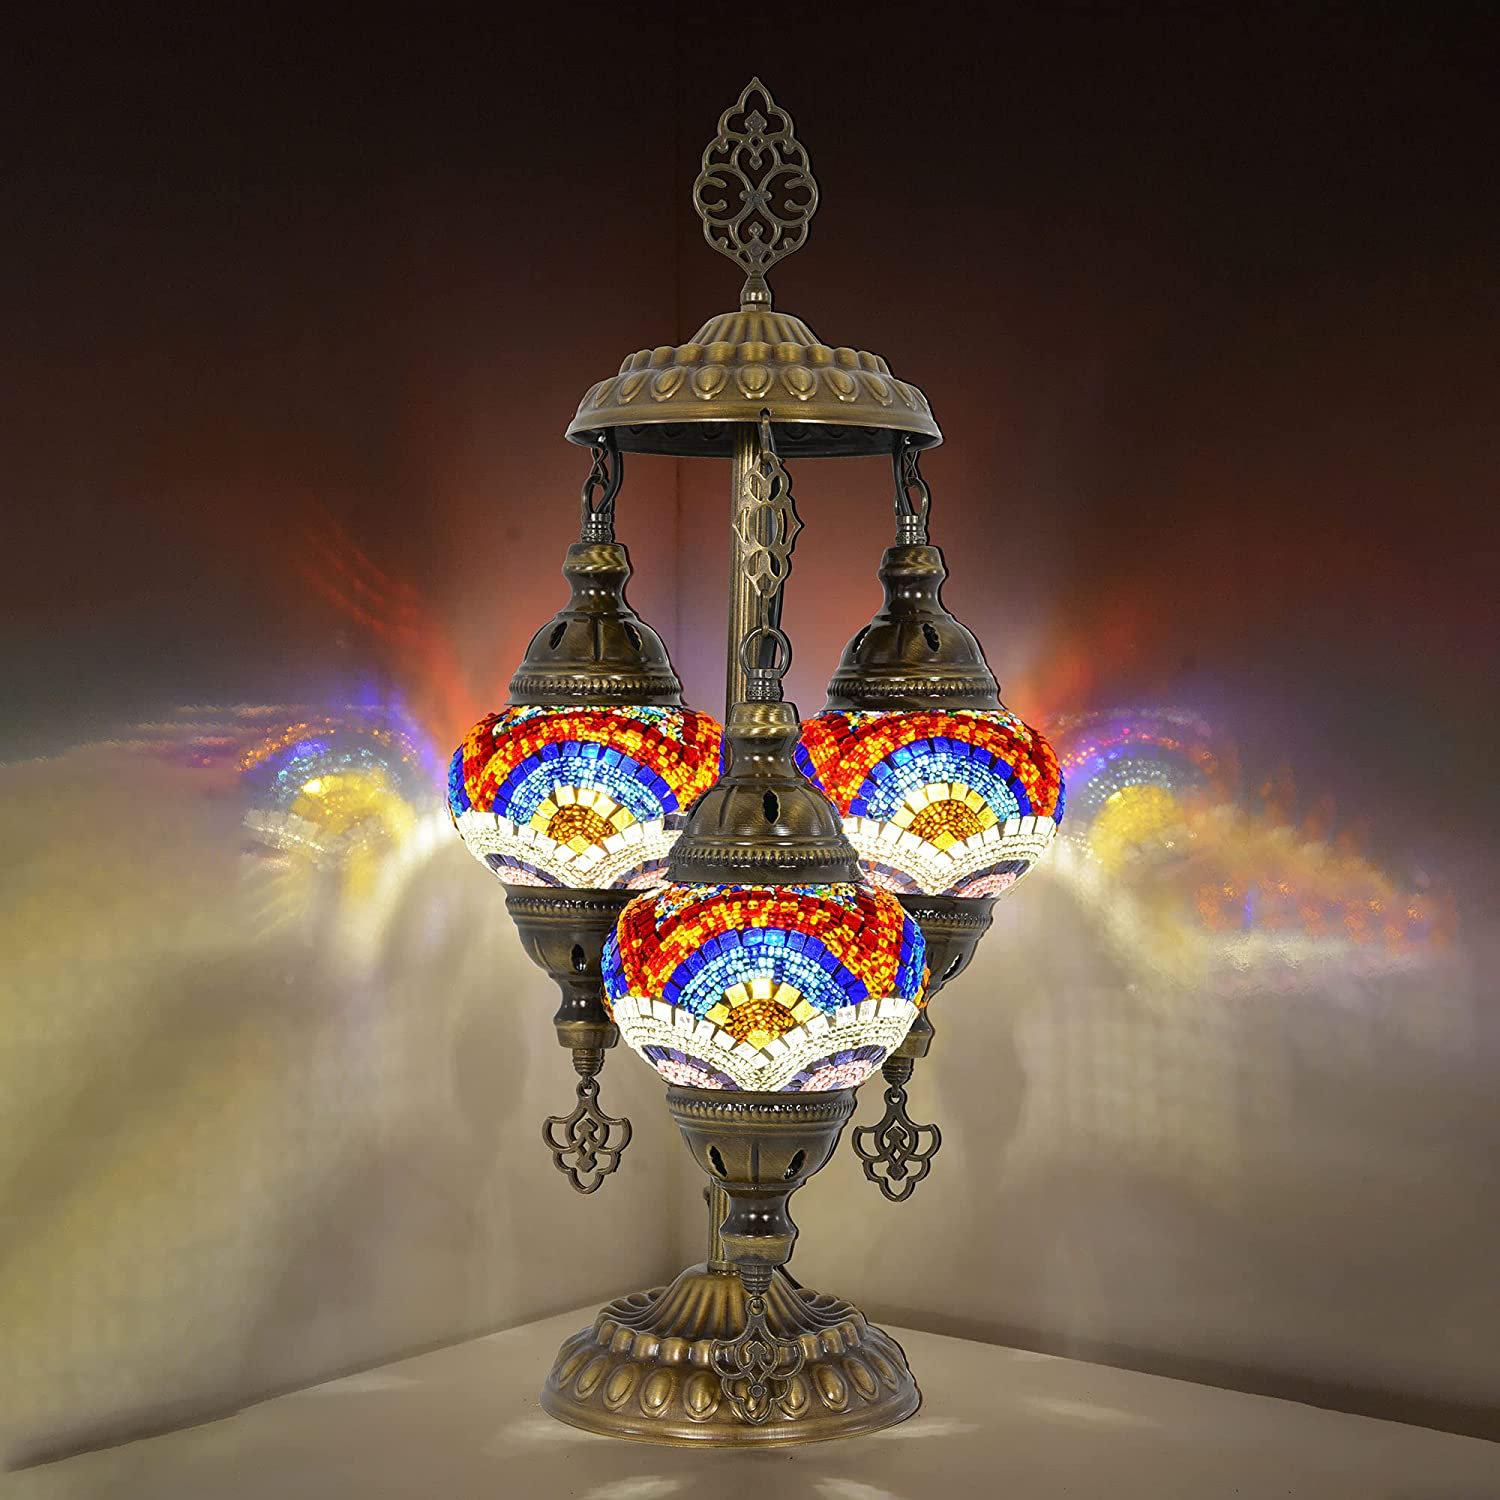 Handmade Turkish Mosaic Table Lamp Turkish Lamp Lighting for Bedroom and Livingroom Led Bulb with Gift Box Decorative Moroccan Lamp